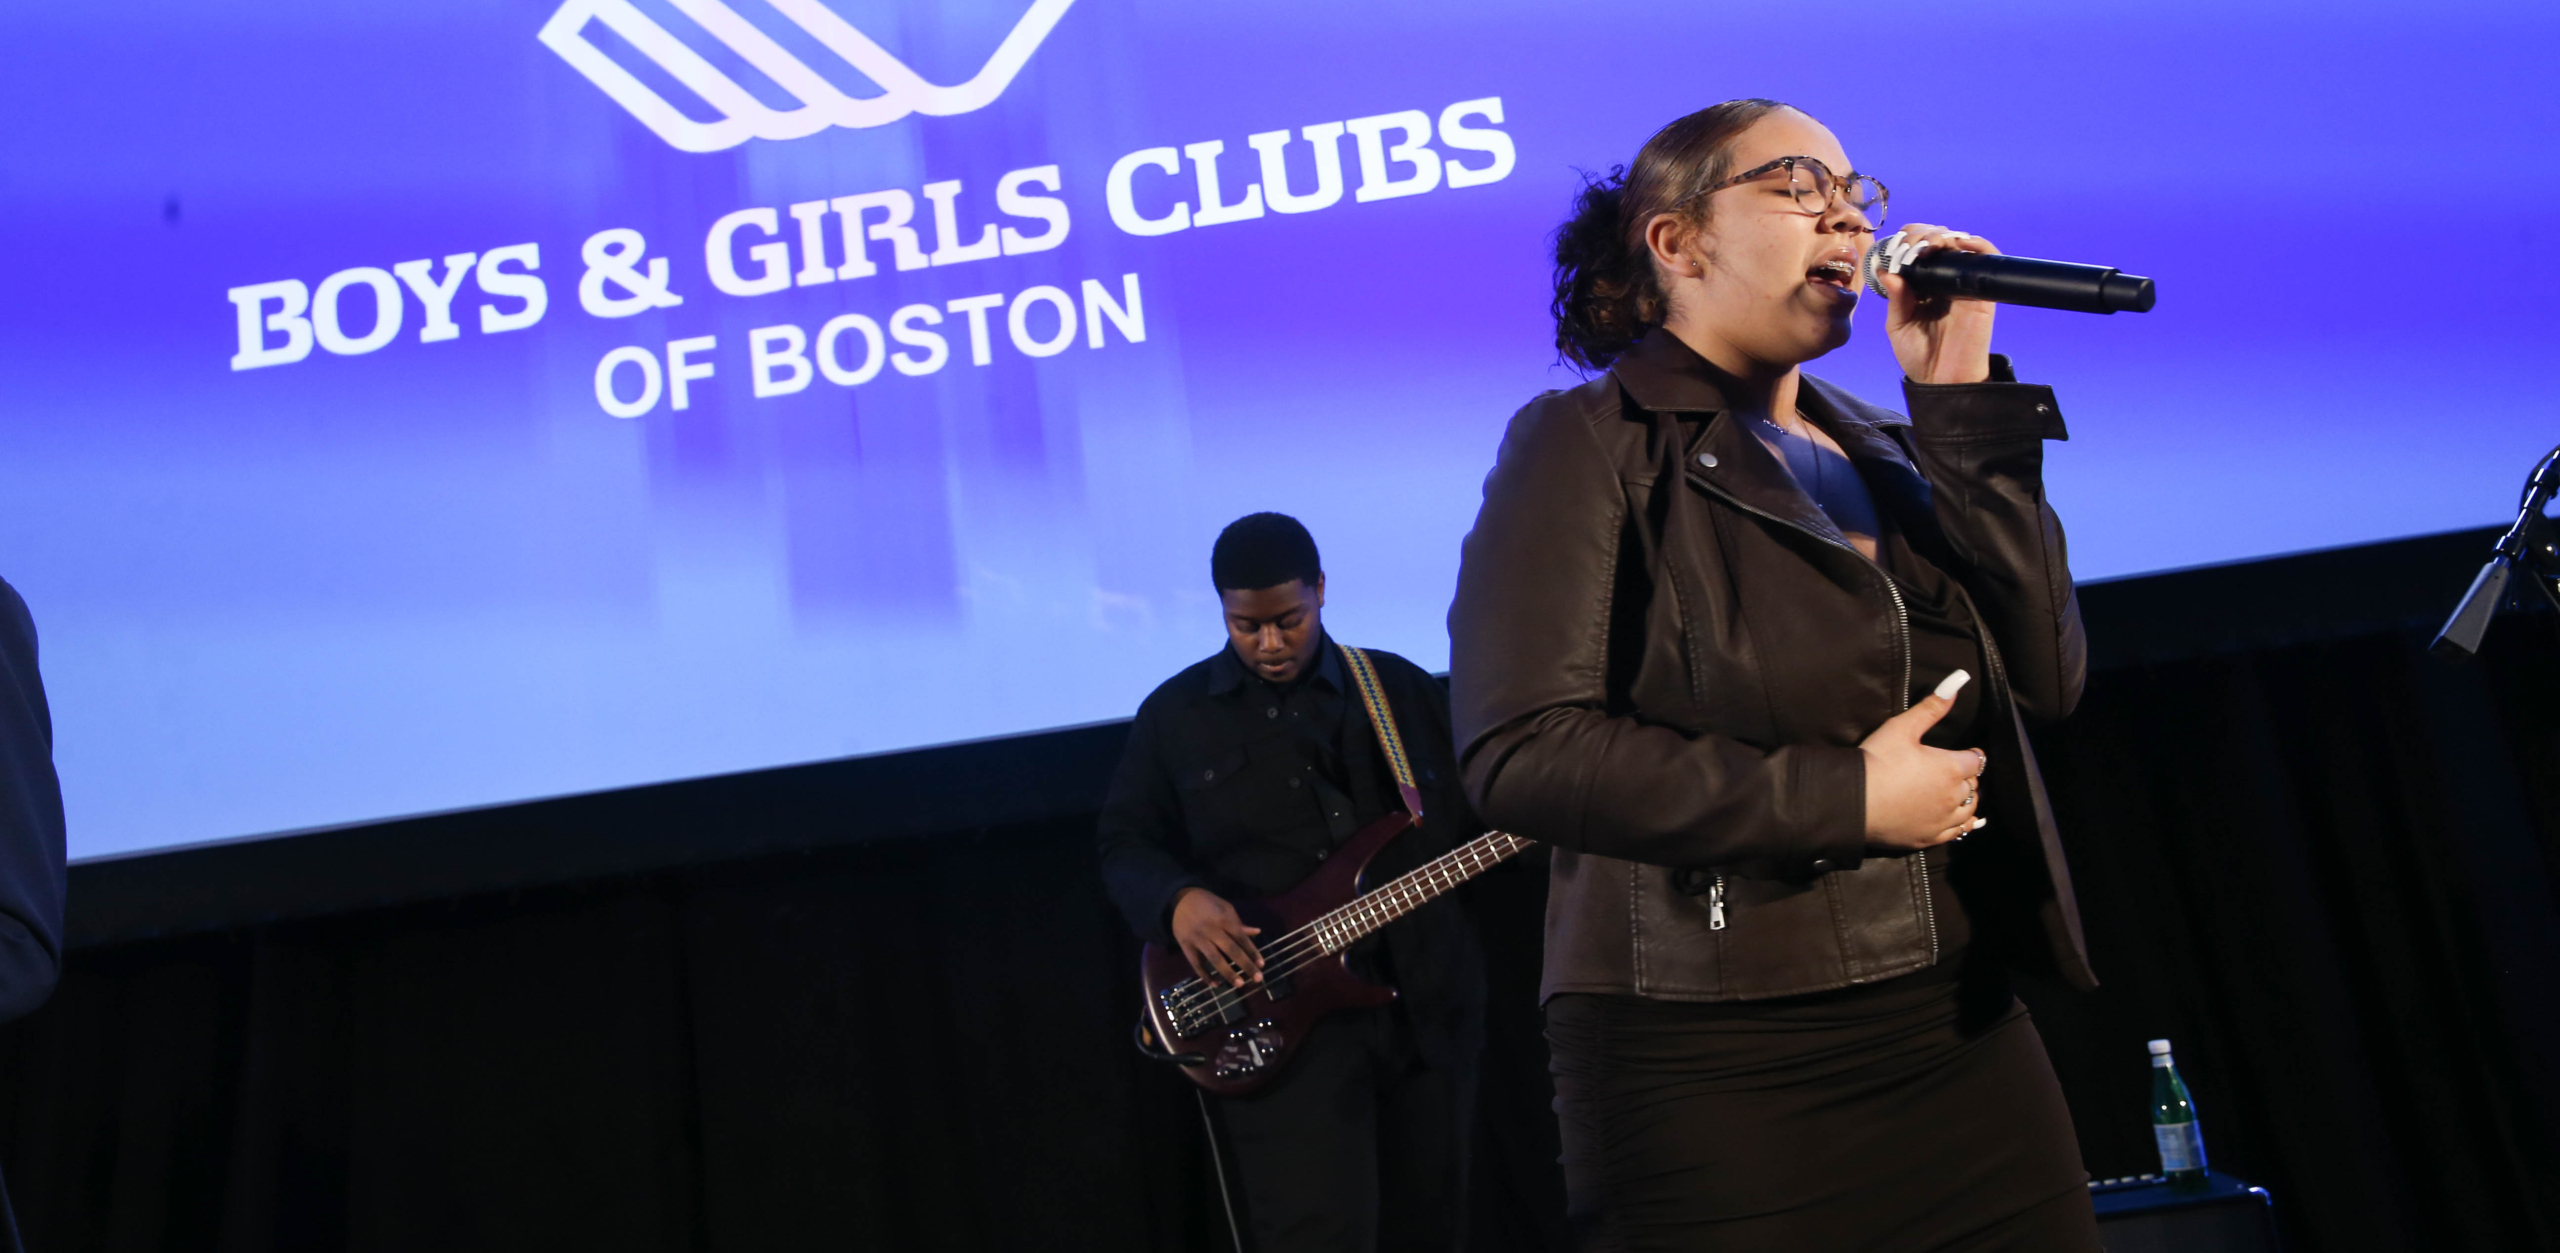 Boys & Girls Clubs of Boston